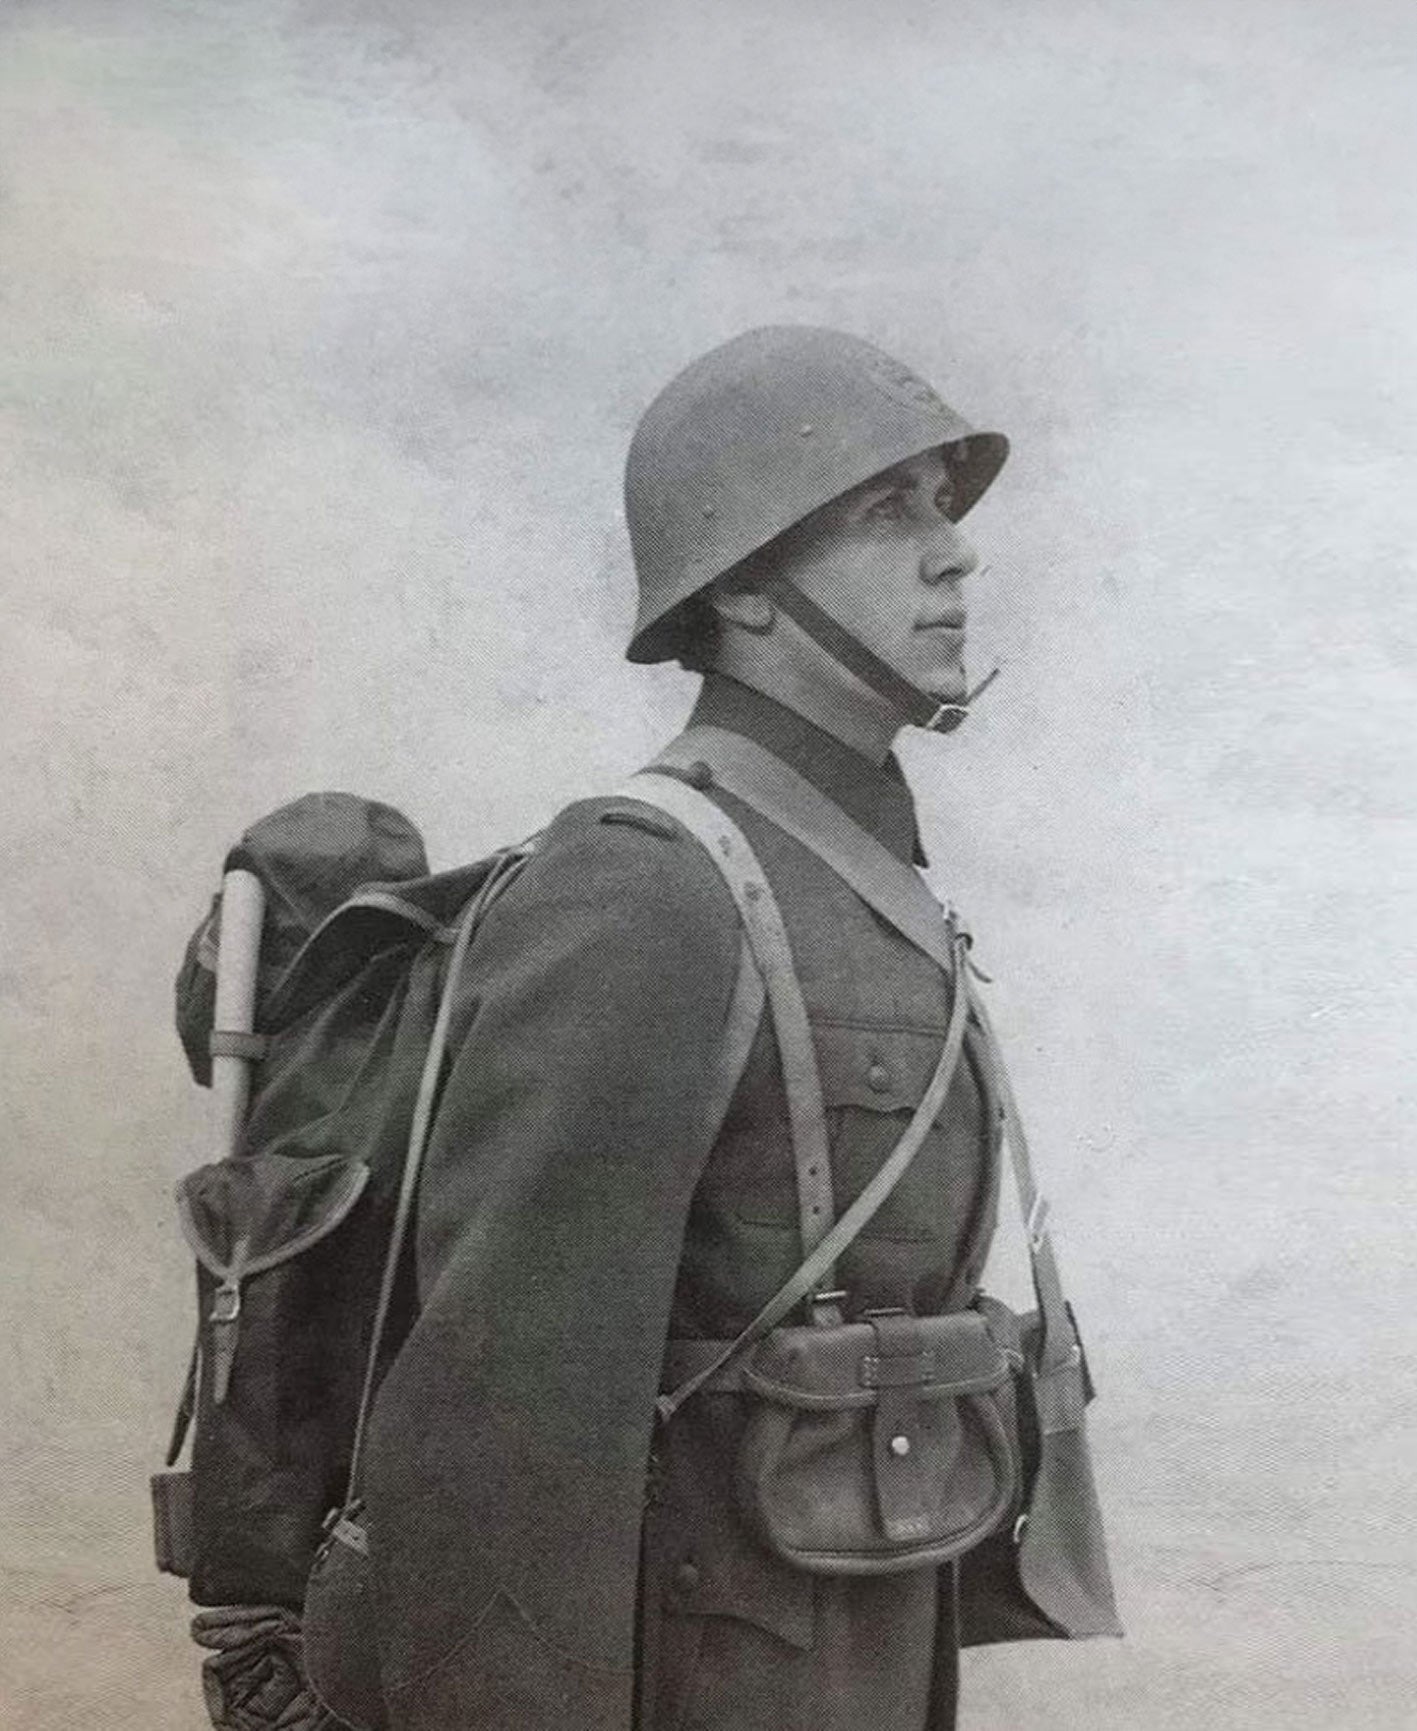 Norwegian Army Corporal 1940